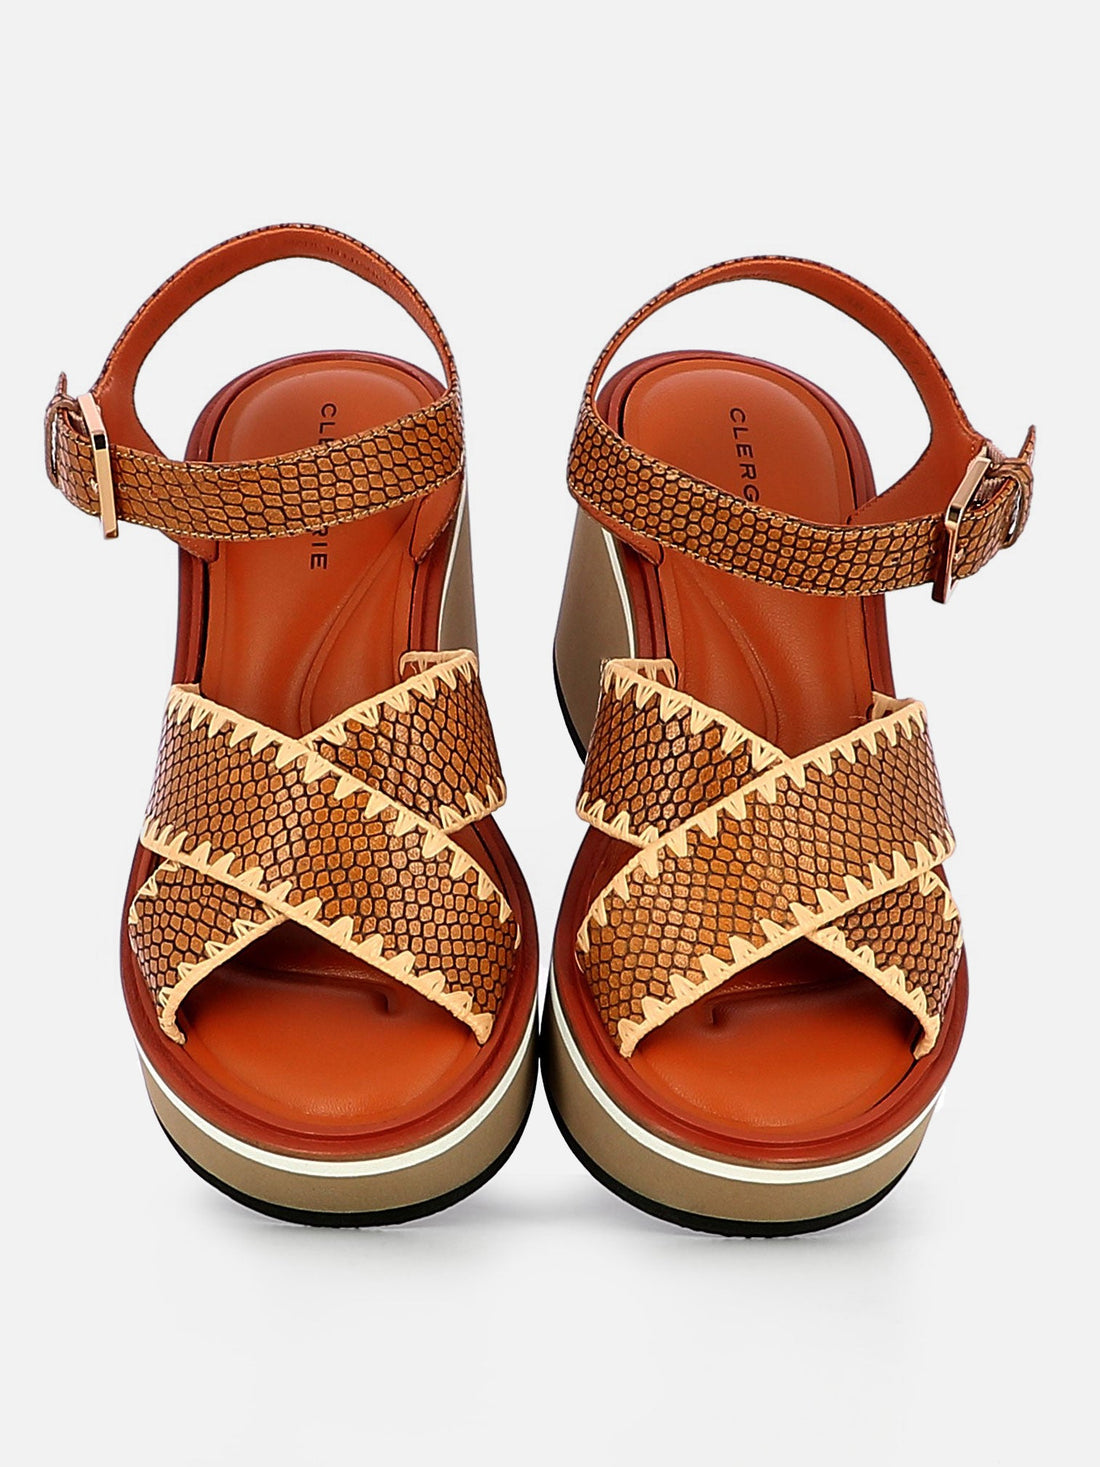 SANDALS - CHARLISR sandals, python effect - 3606063967396 - Clergerie Paris - Europe